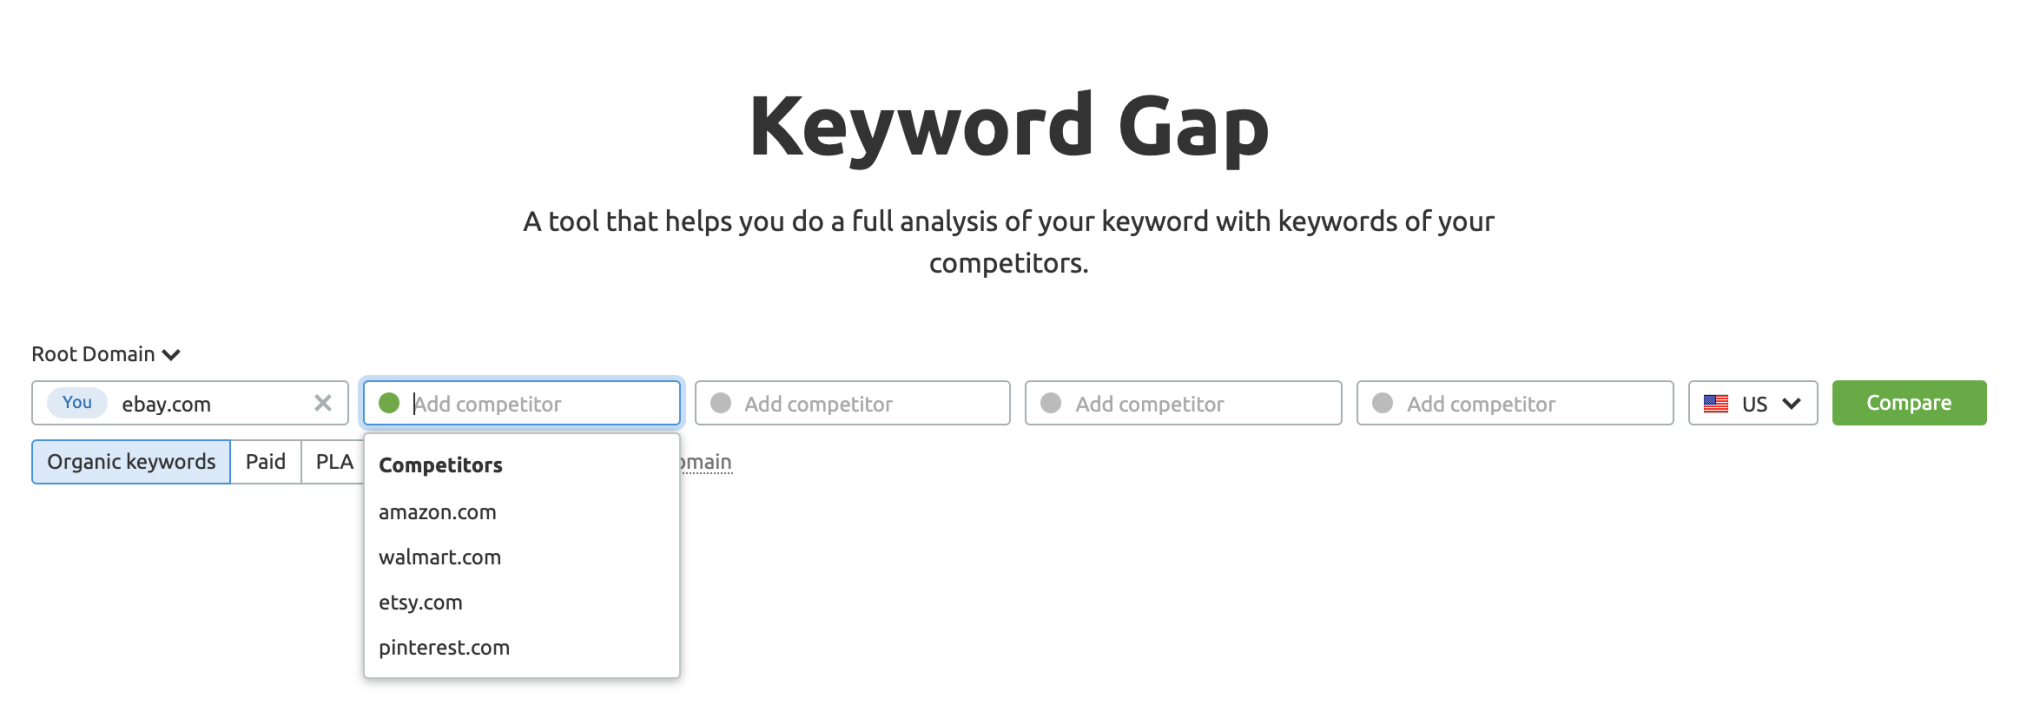 Keyword Gap home screen